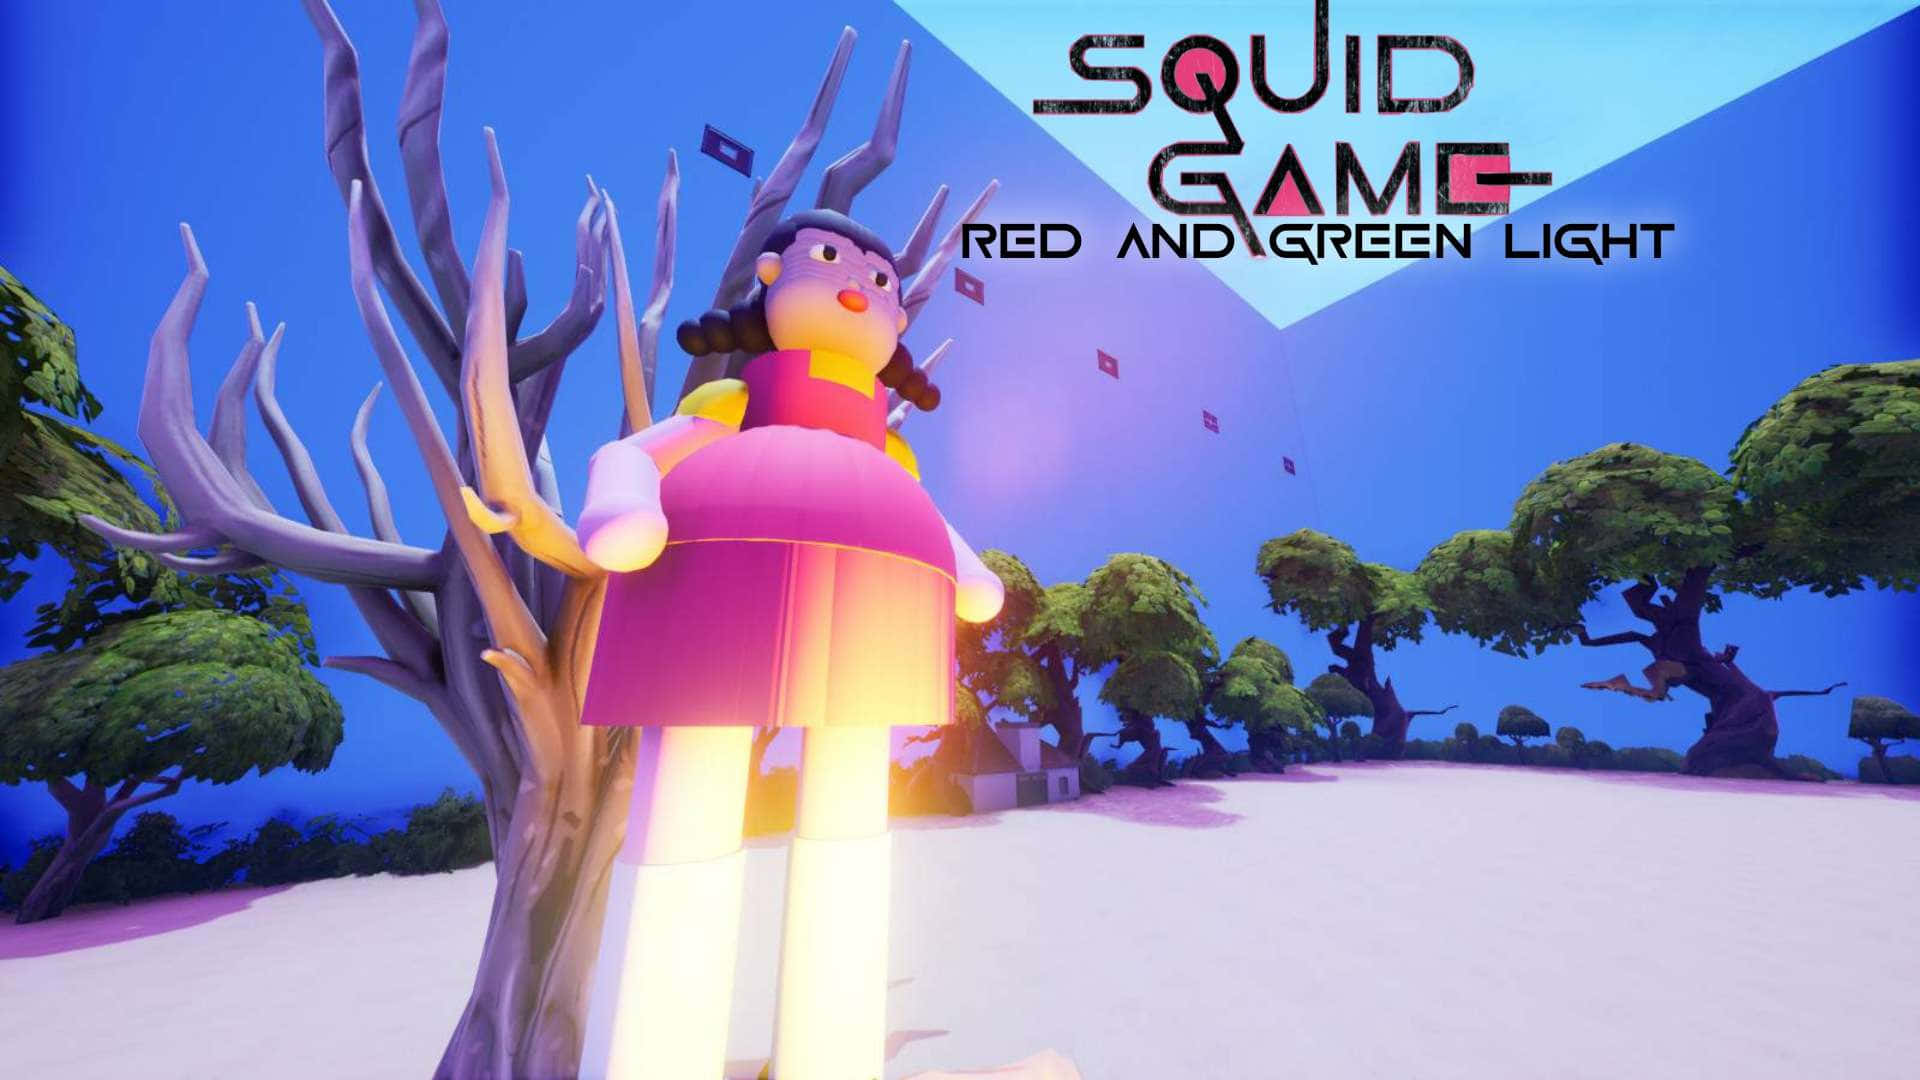 Fondode Pantalla De Fortnite Creative Squid Game Red Light Green Light.